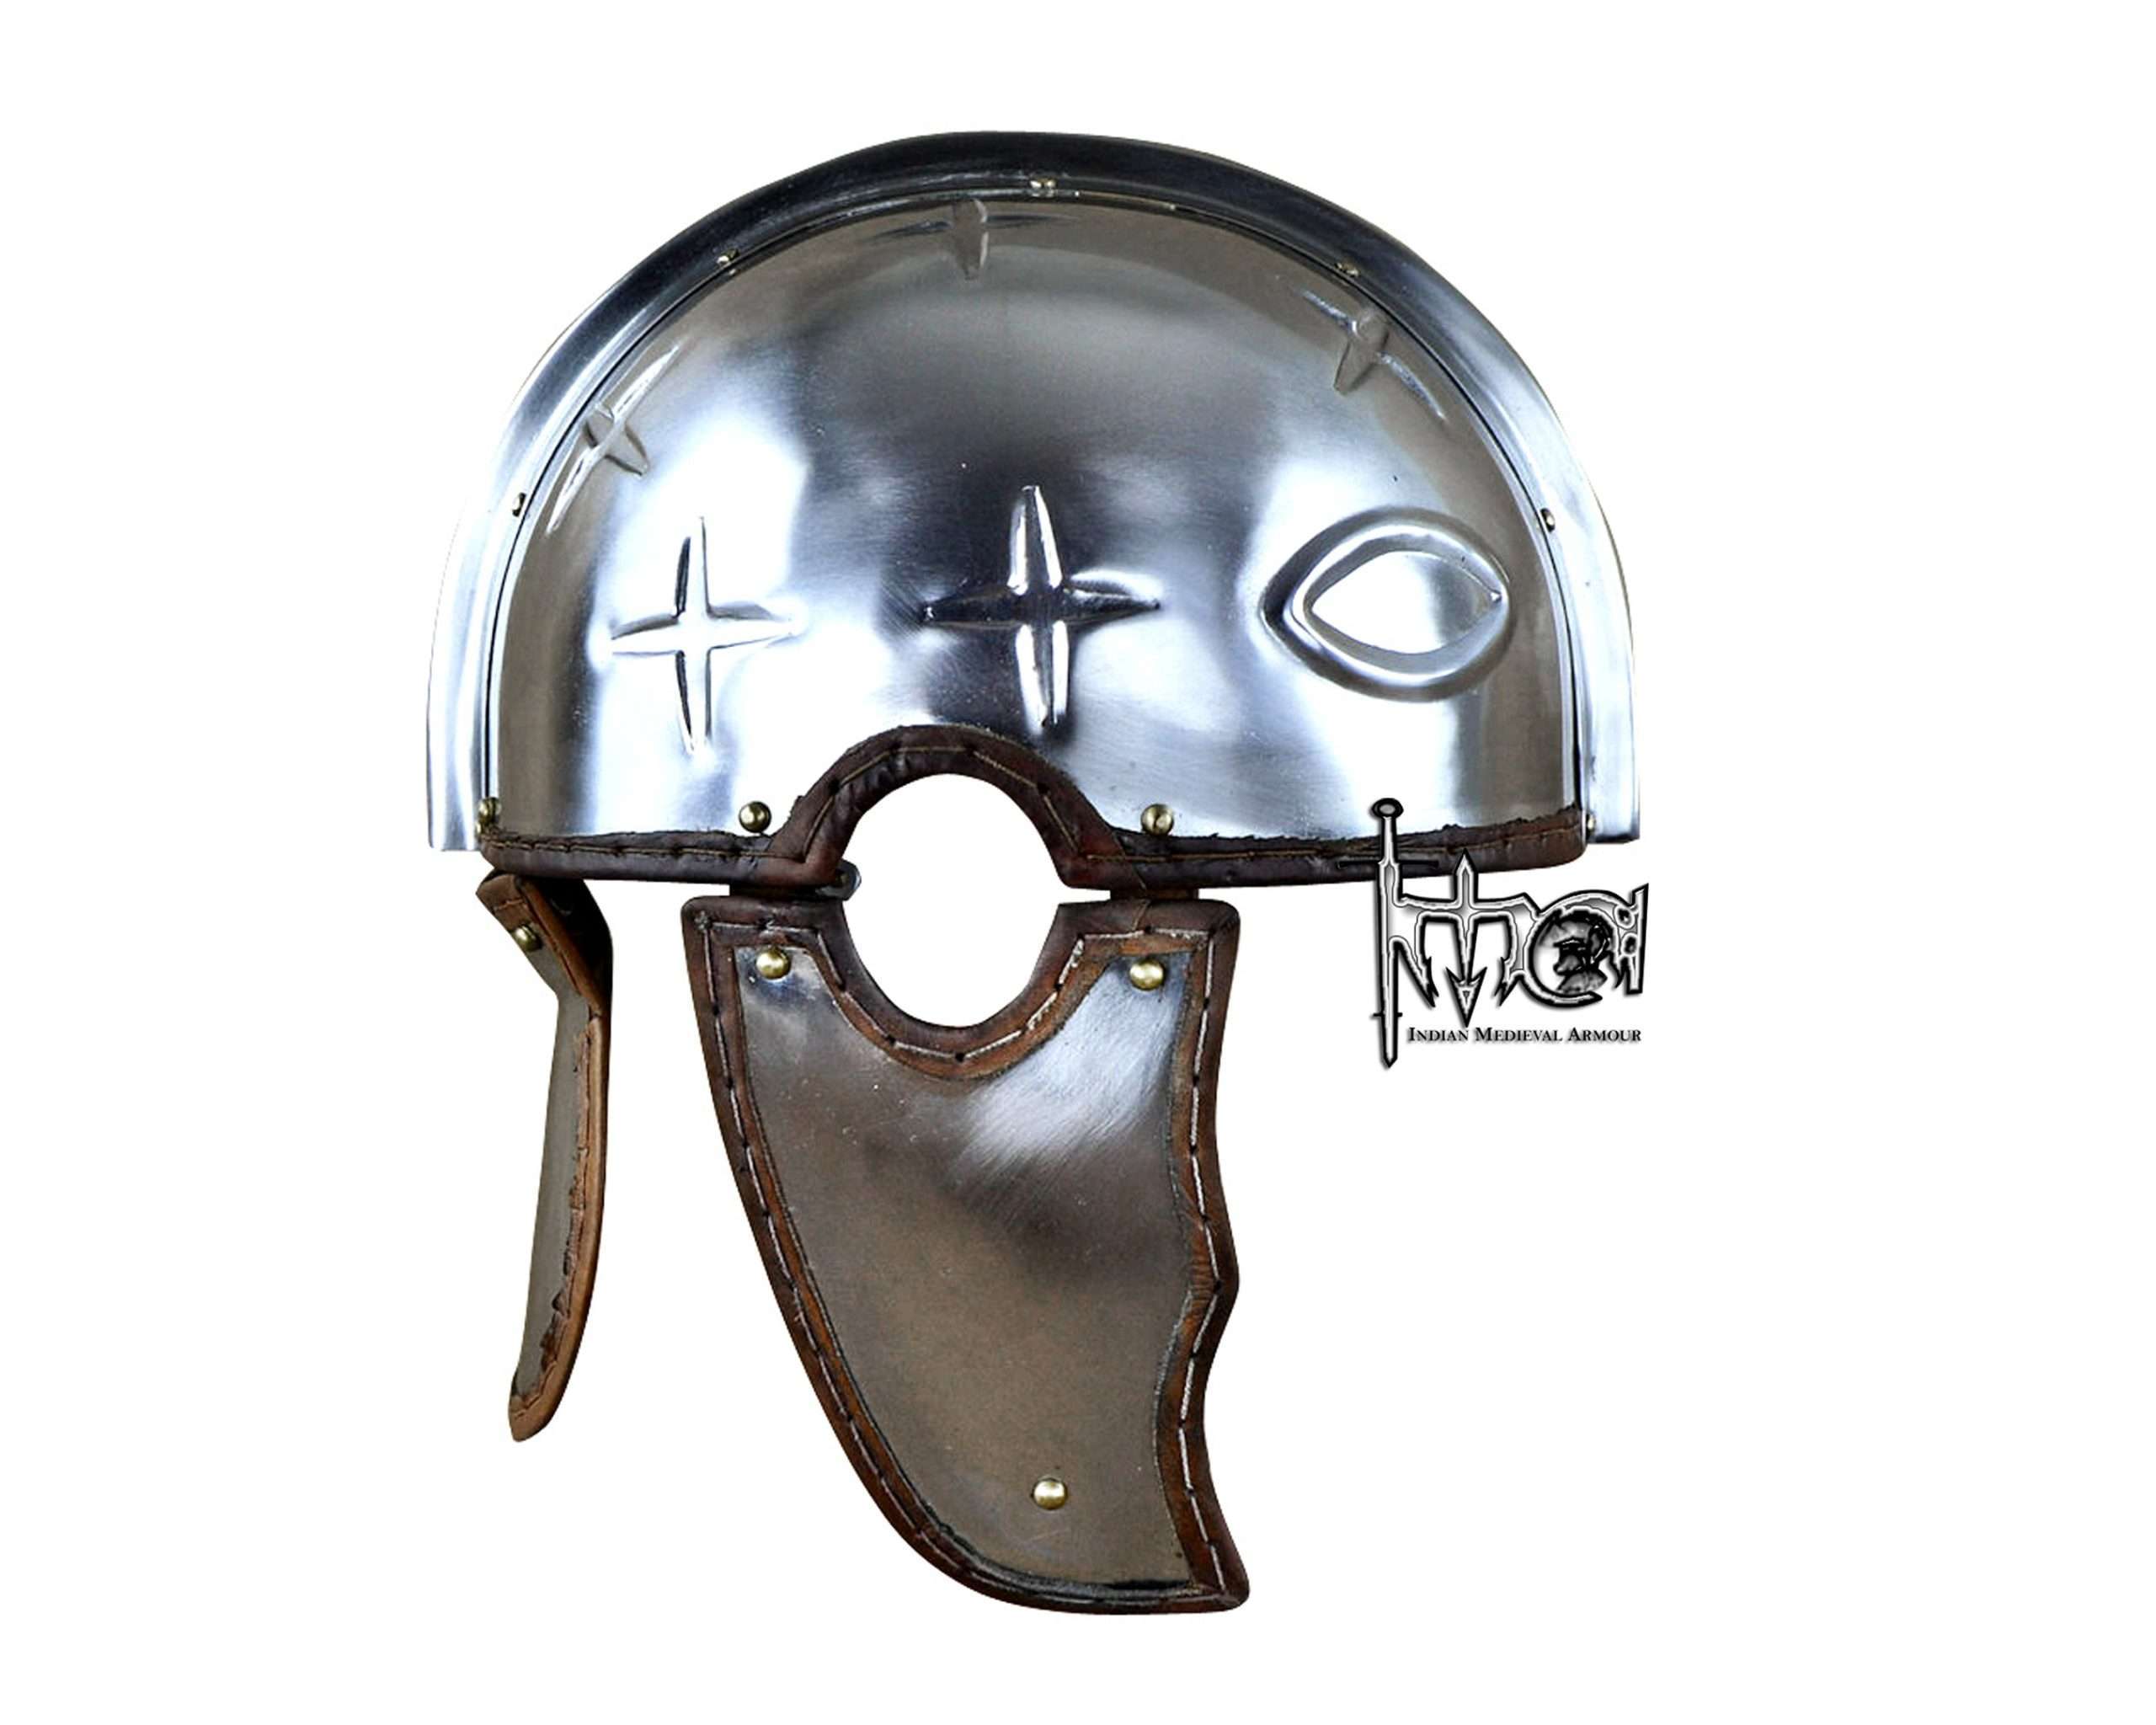 roman helmet side